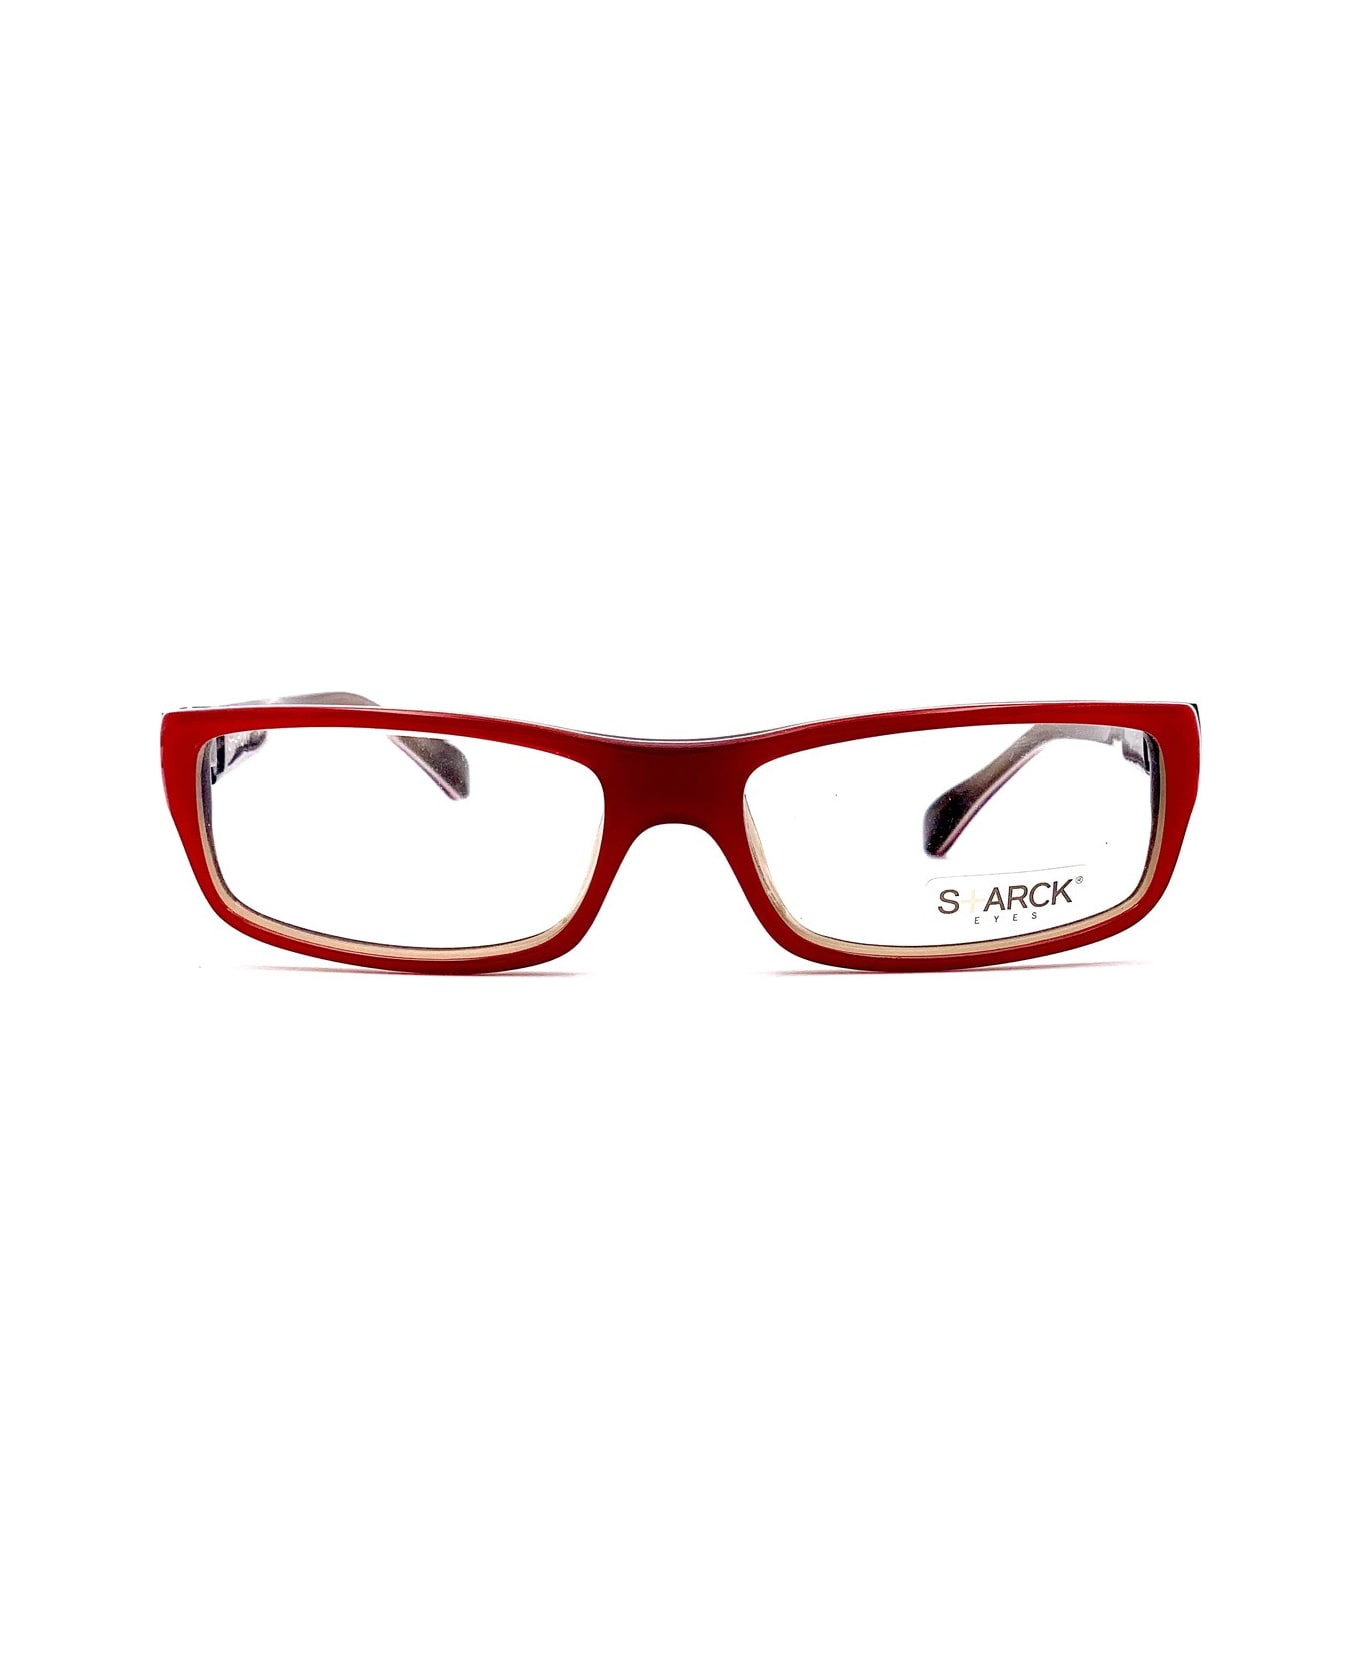 Philippe Starck P0501 Glasses - Rosso アイウェア